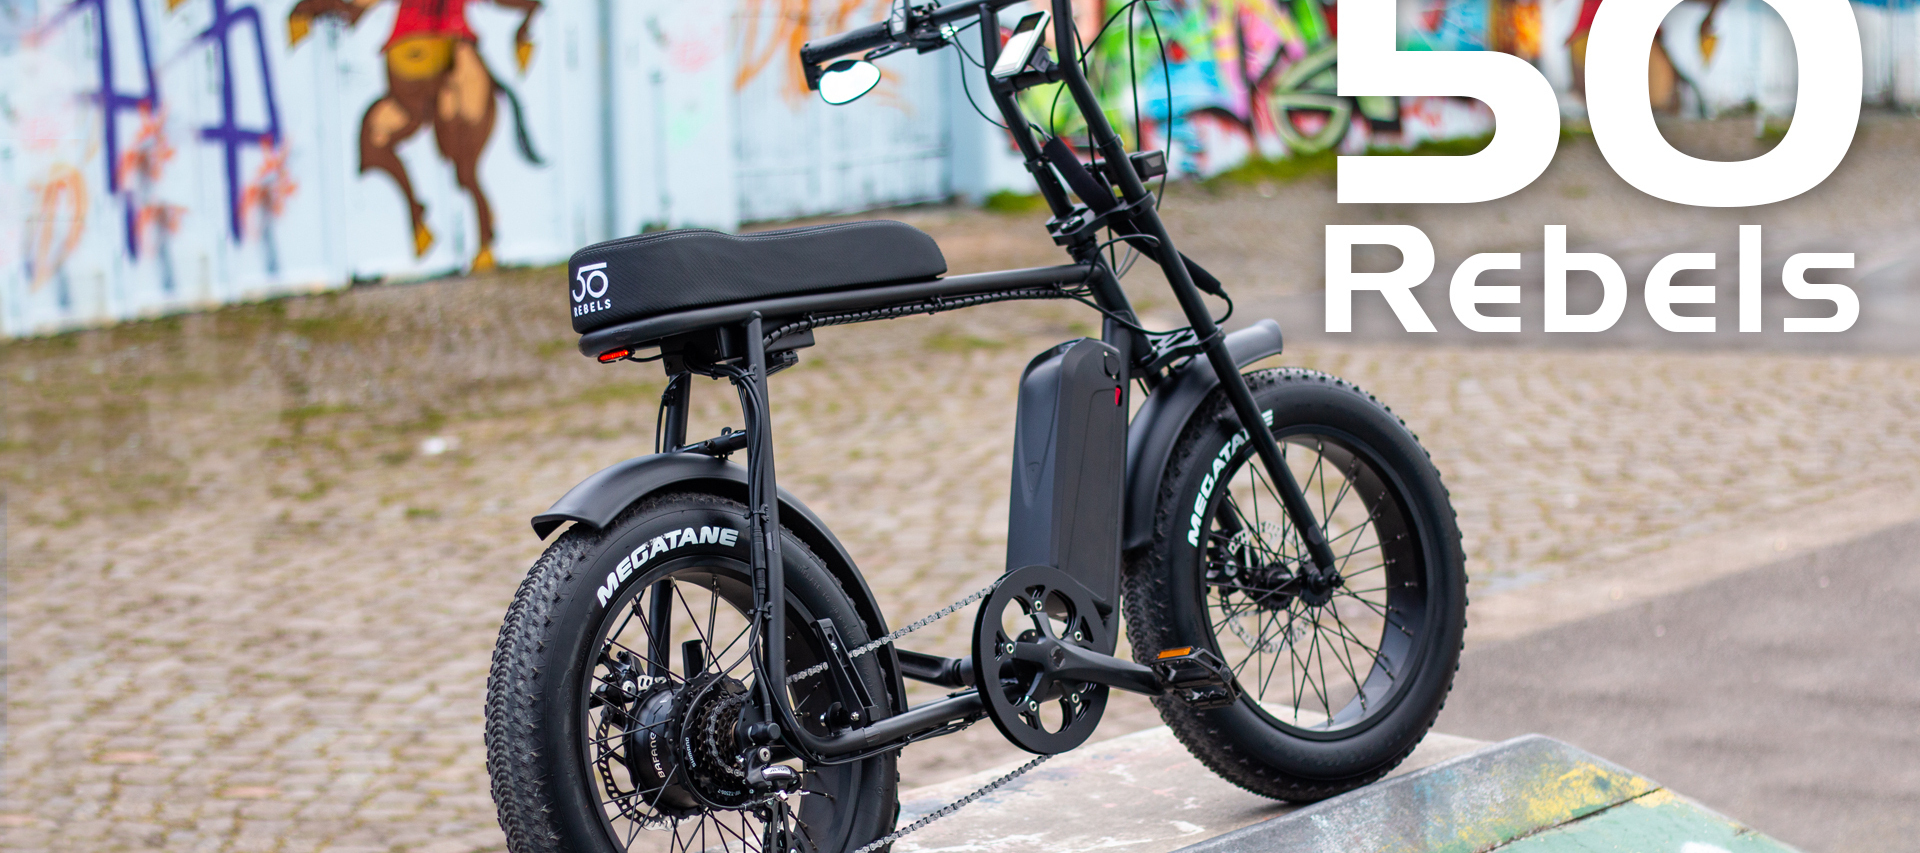 Ein E-Bike, das anders ist: Ich teste das 50 Rebels Fatbike